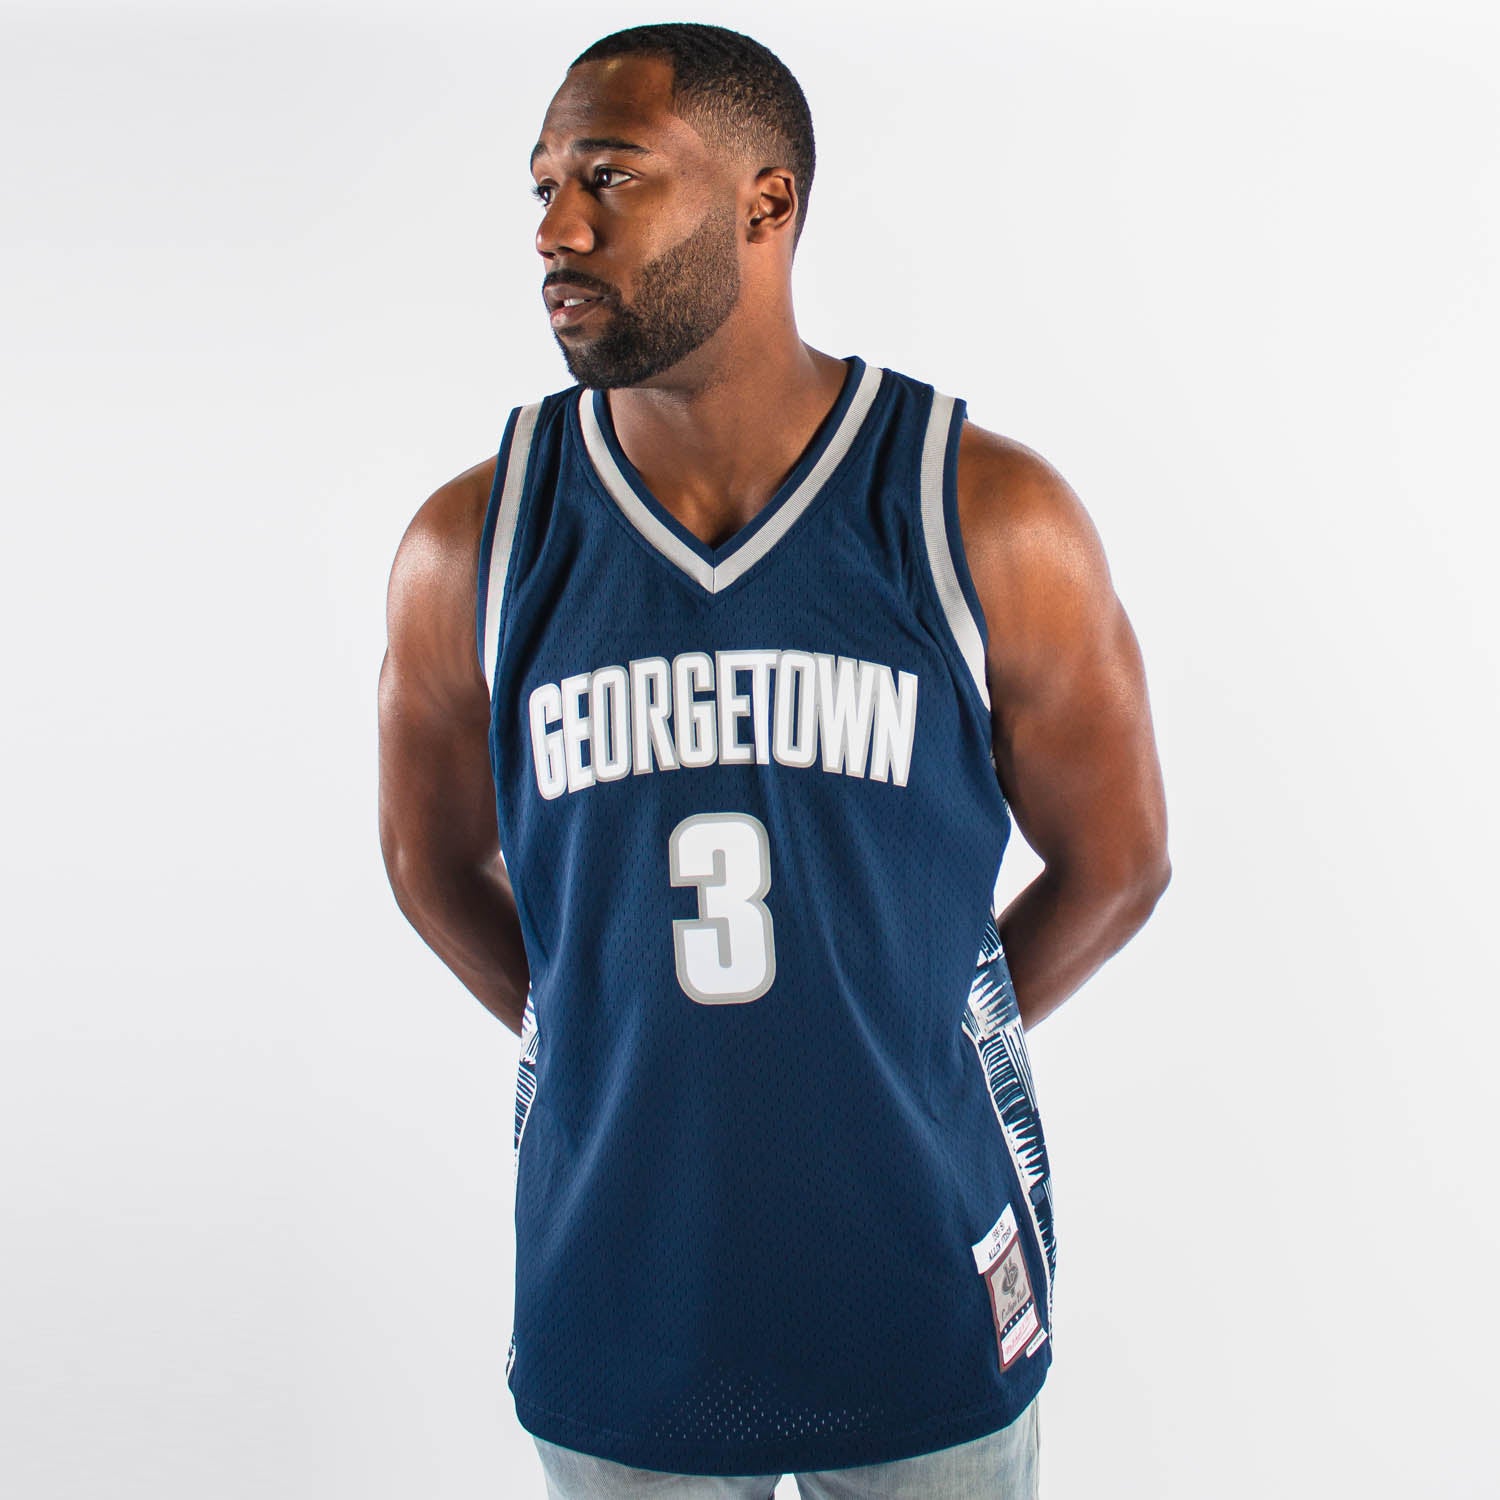 My Georgetown Hoyas Allen Iverson jersey : r/basketballjerseys